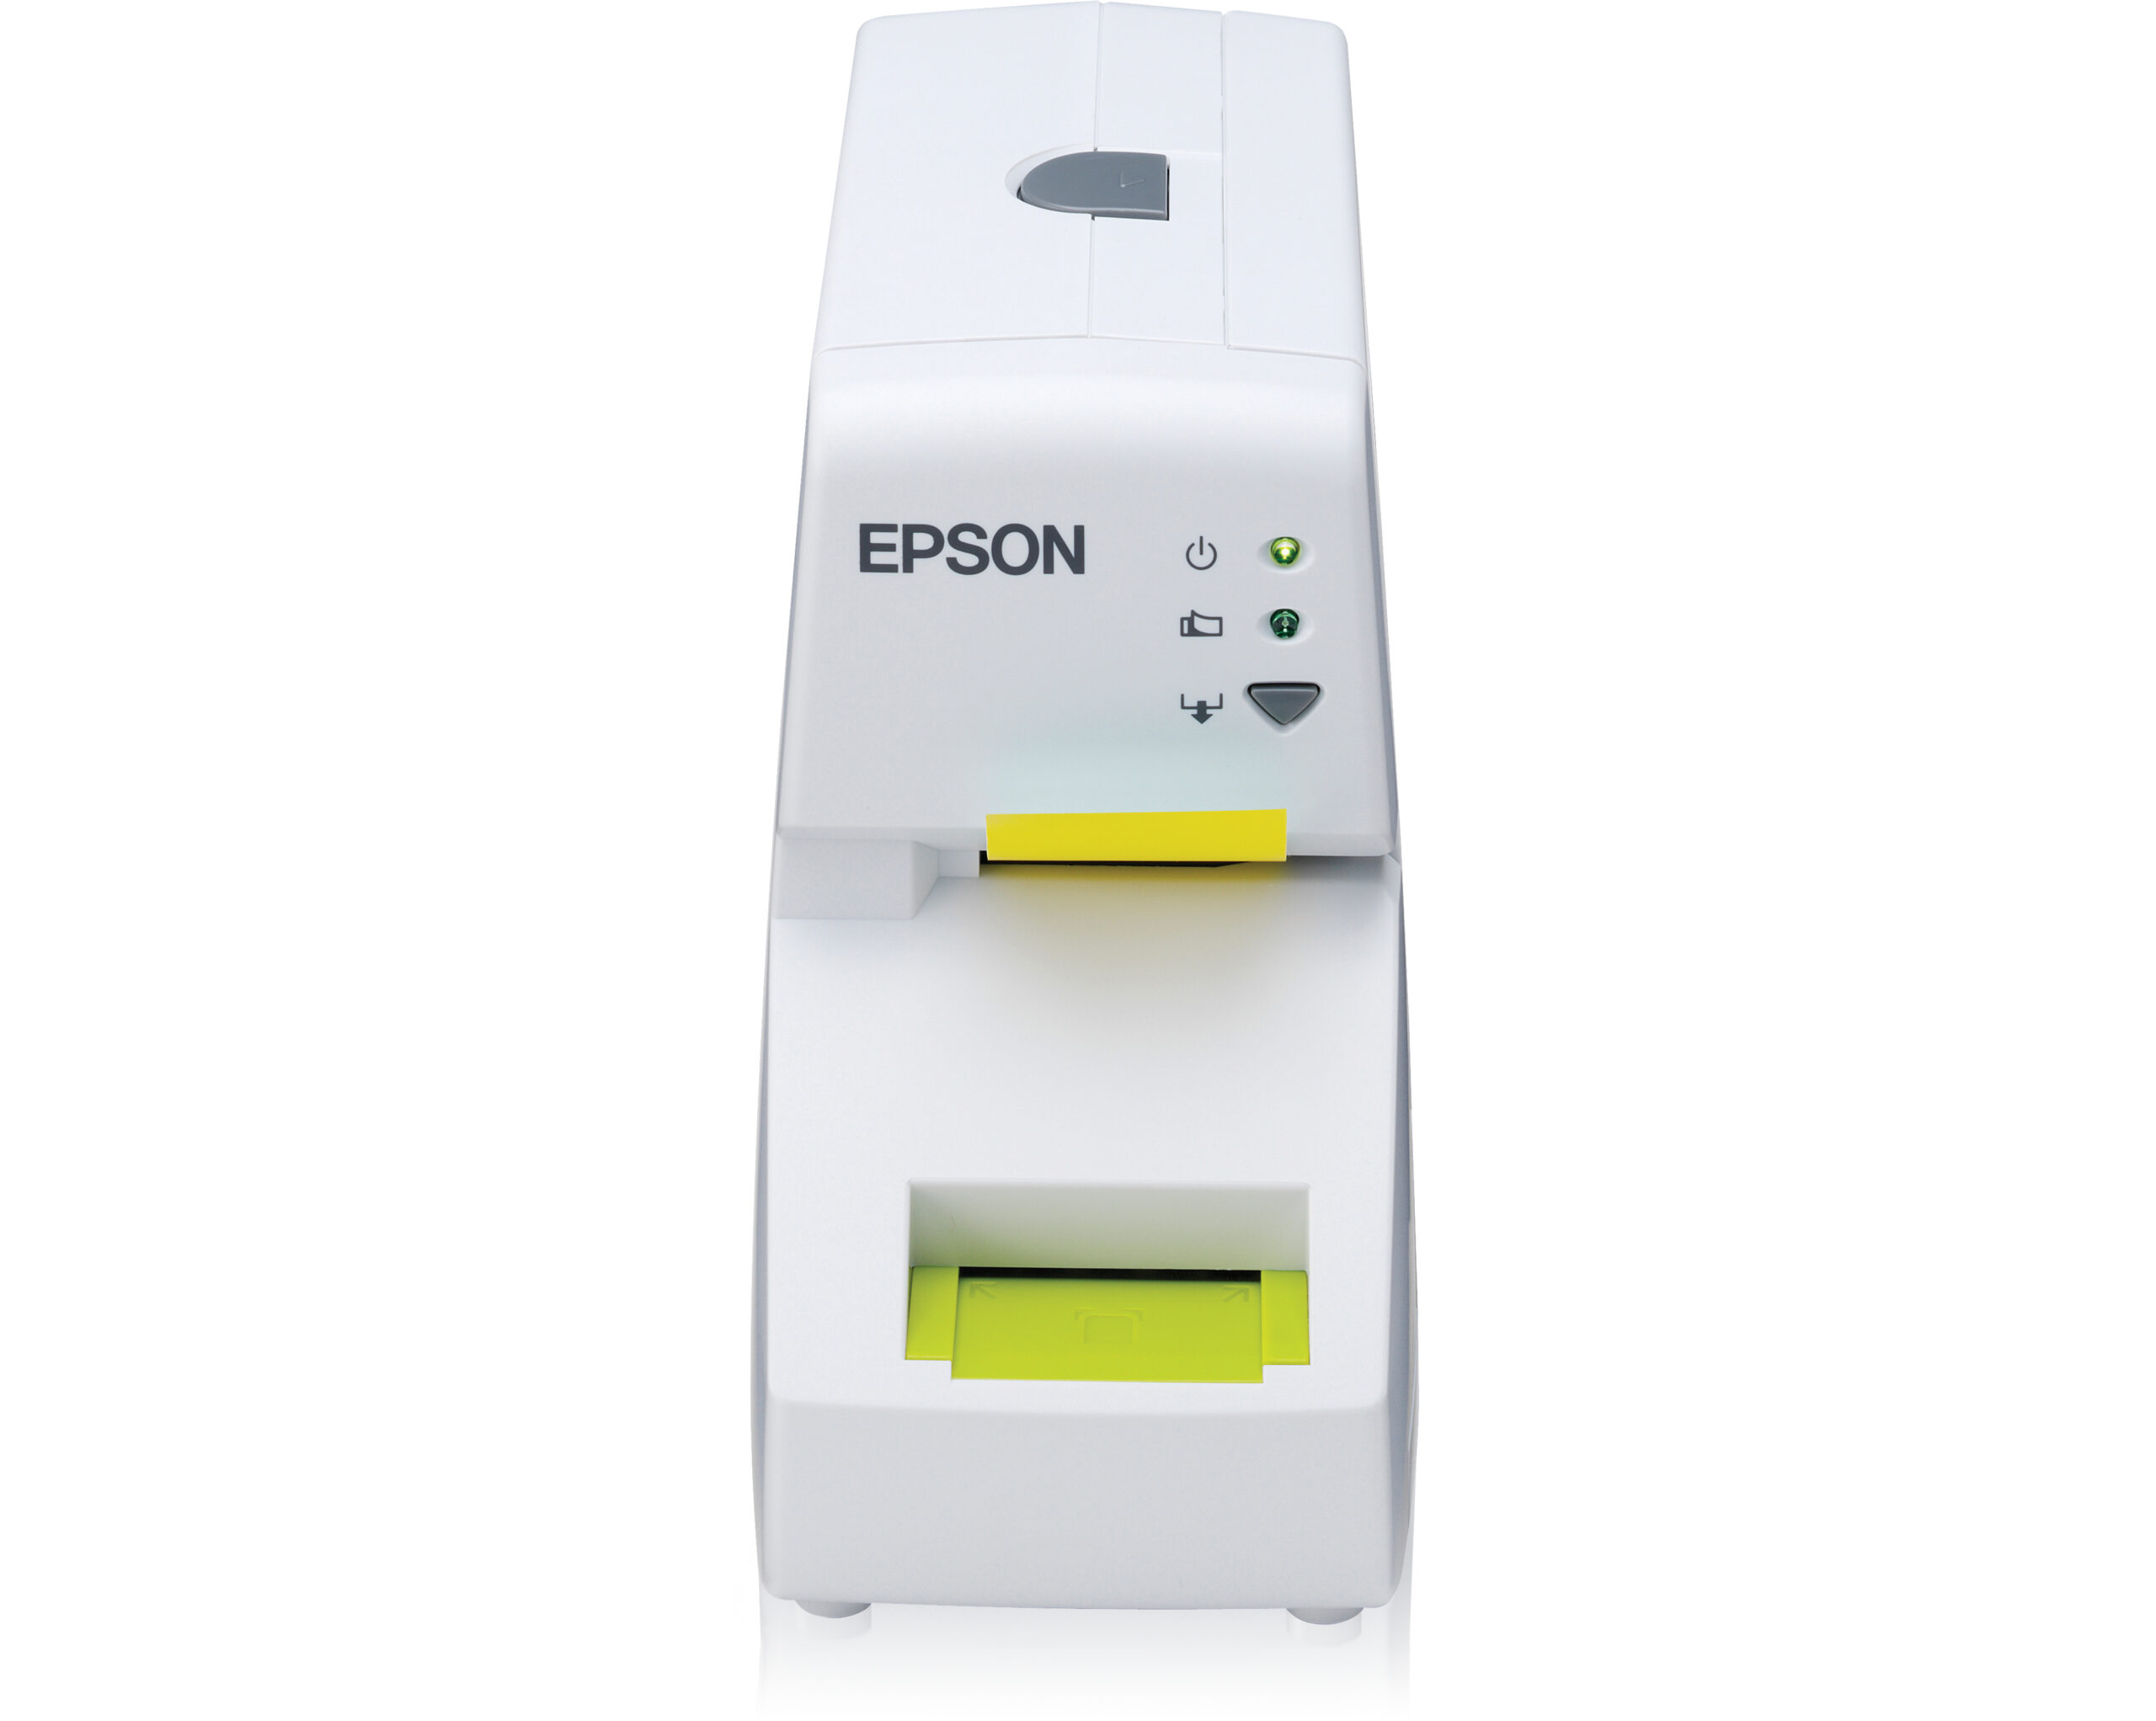 Etichettatrice Epson Labelwork 900p Epson C51c540080 8715946492728